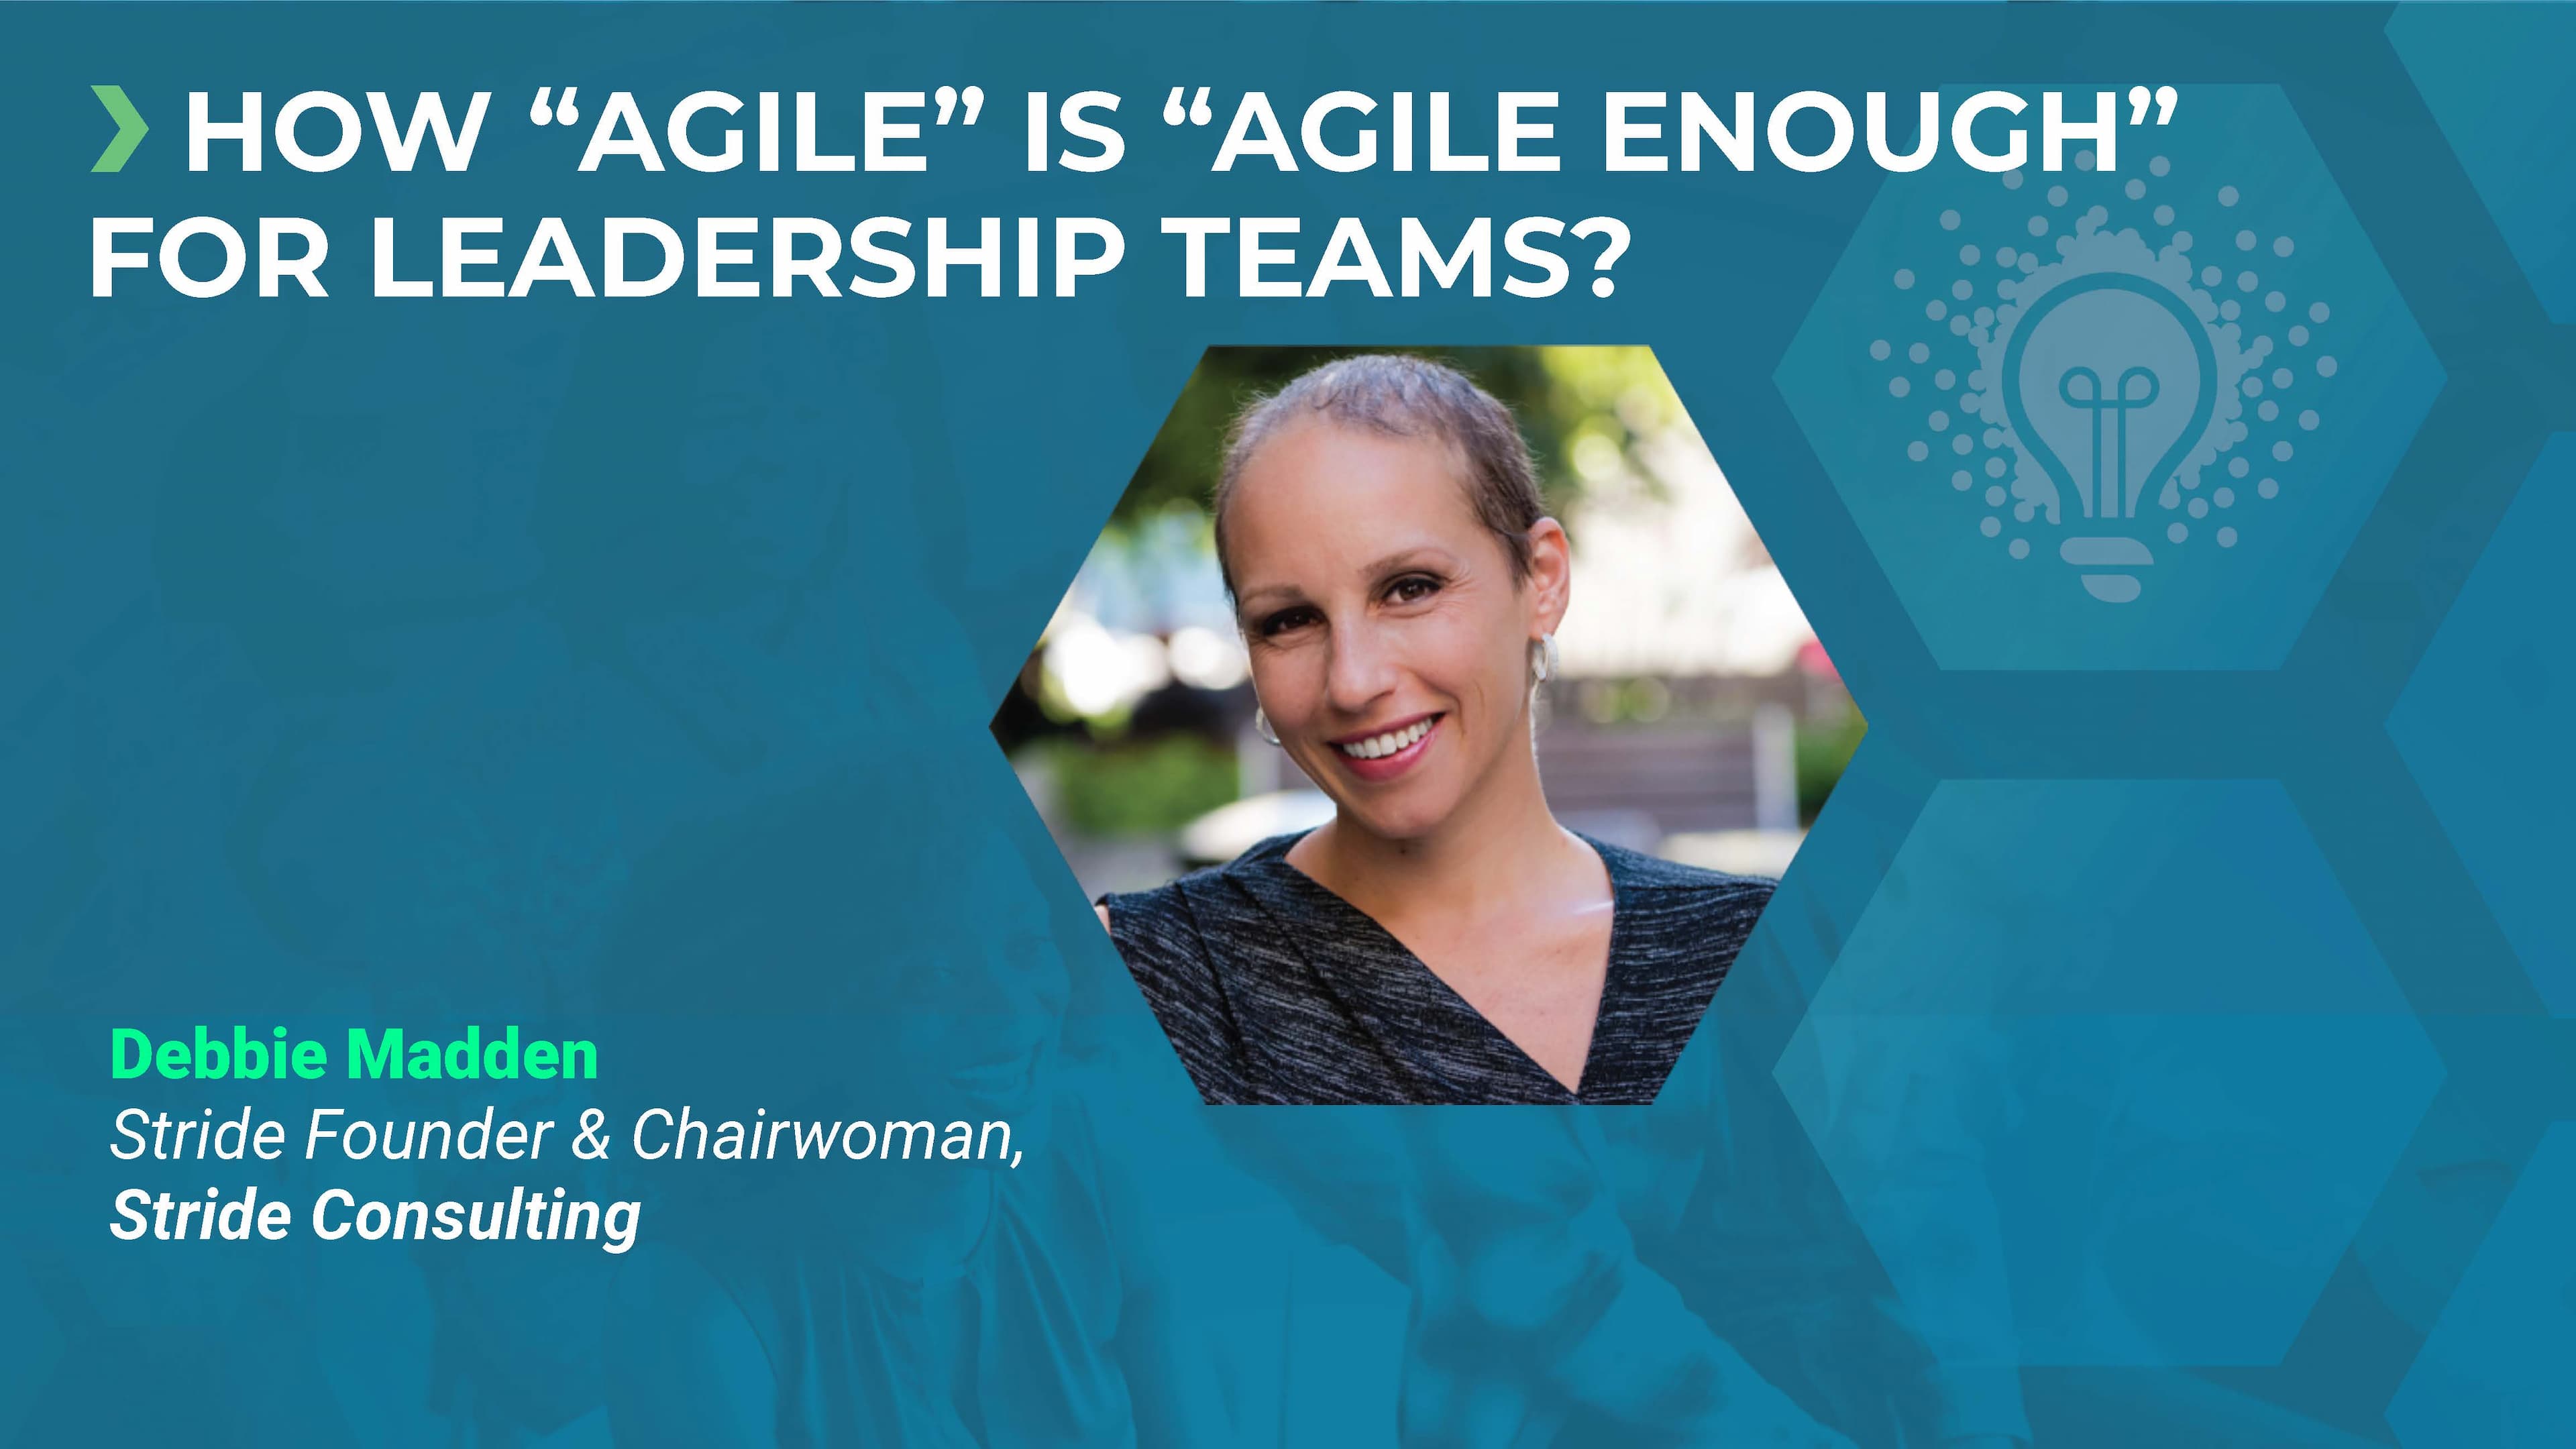 How Agile is "Agile Enough?"